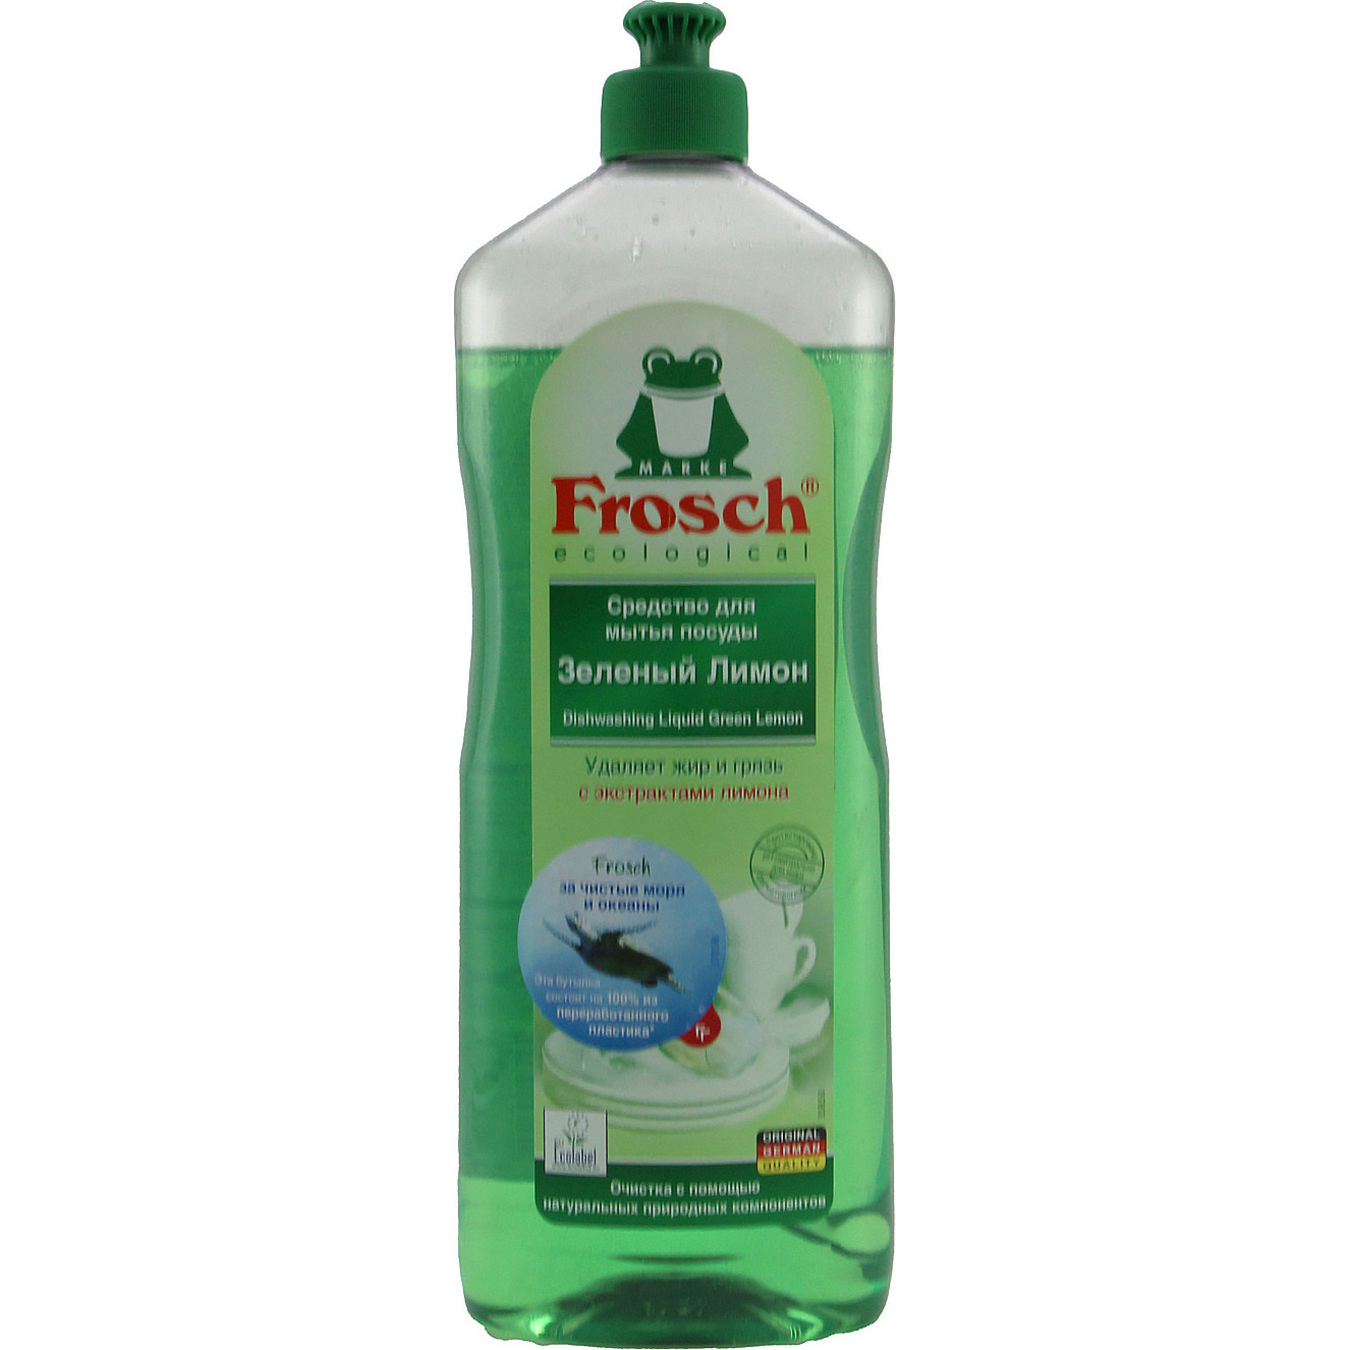 Frosch Dishwashing Liquid Green Lemon 1l